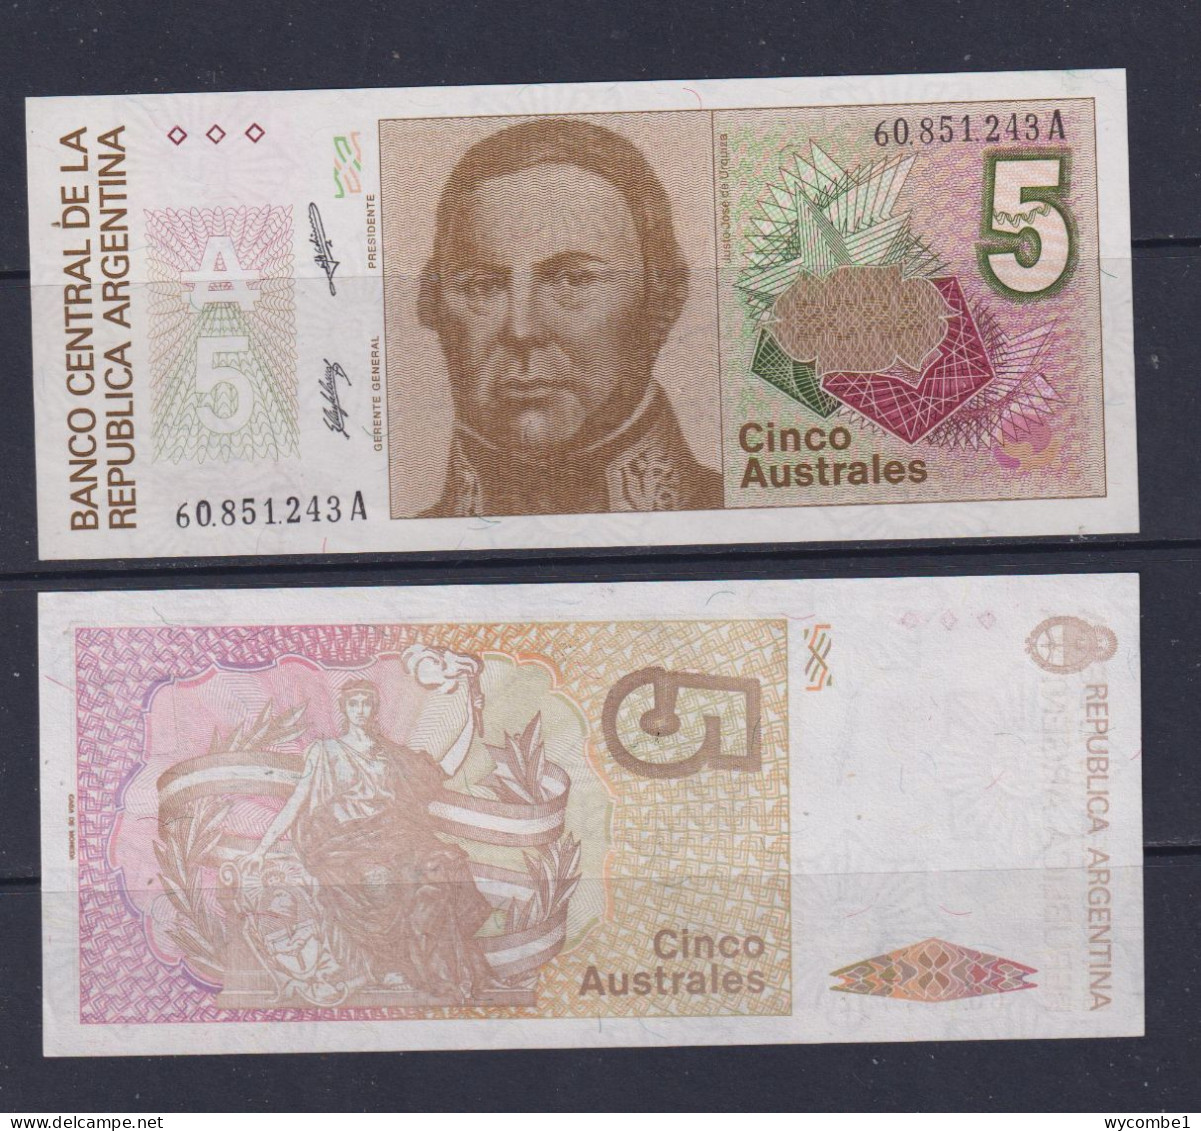 ARGENTINA  -  1985-89 5 Australes  UNC/aUNC  Banknote - Argentinien